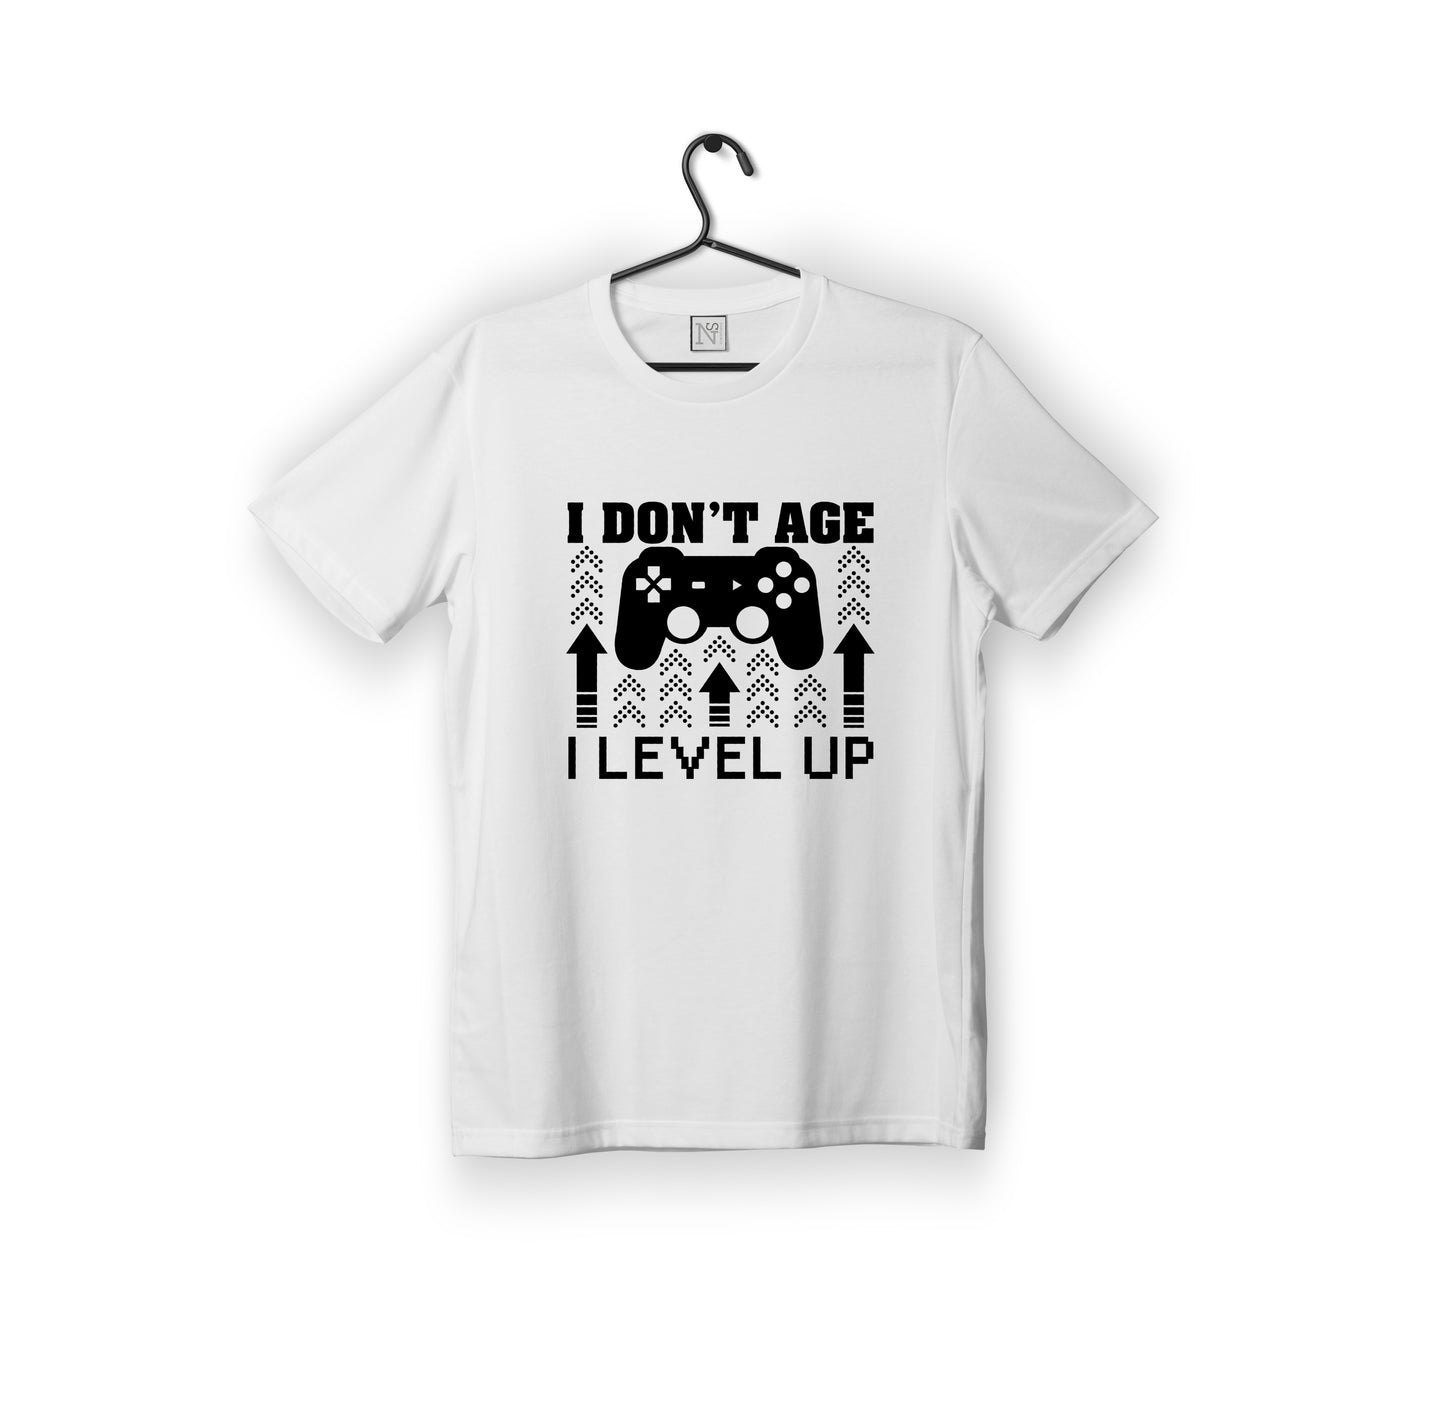 "Level Up" T-shirt